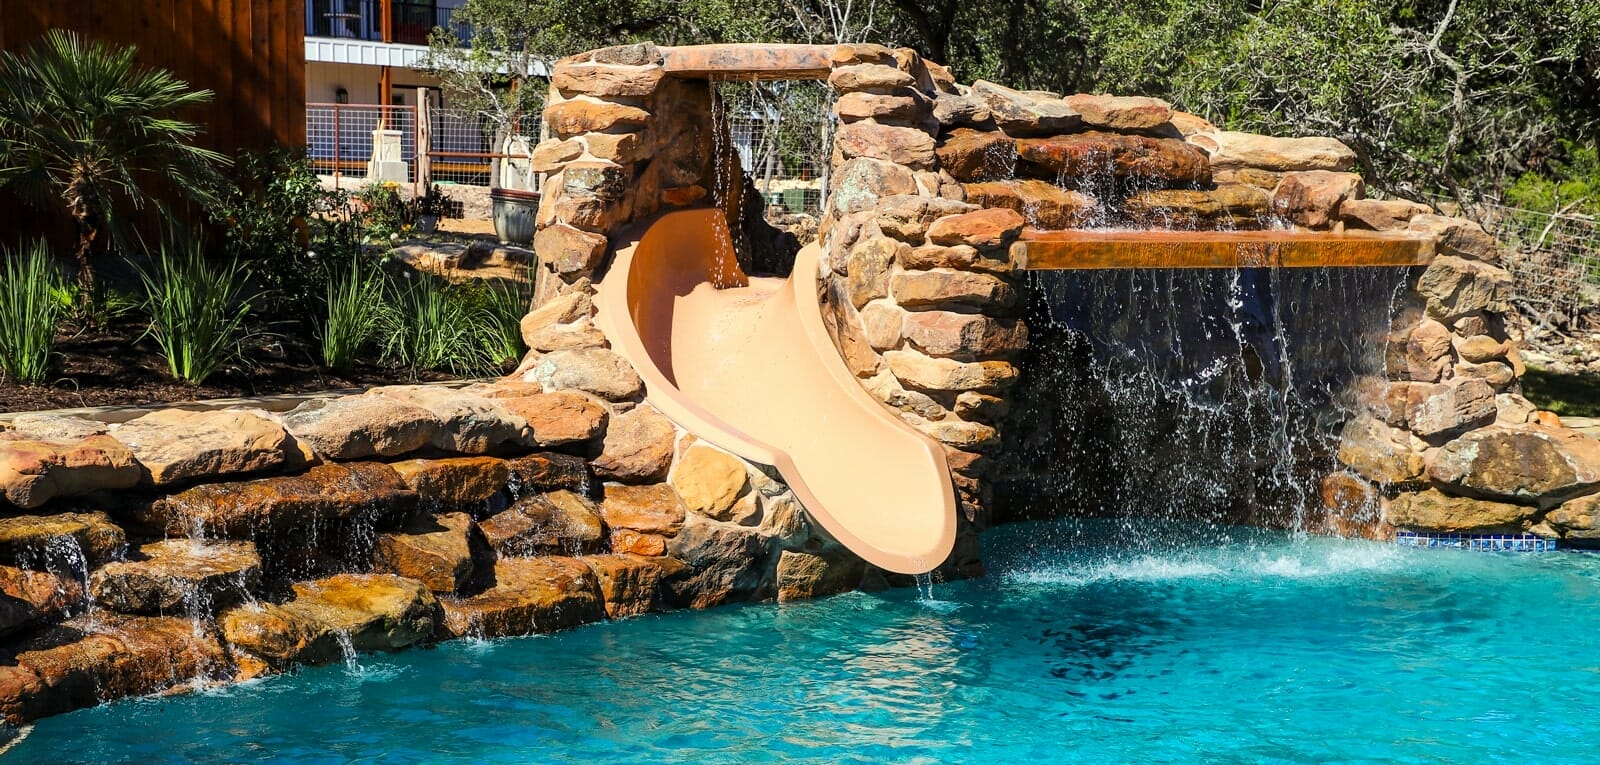 inground pool with rock waterfall slide